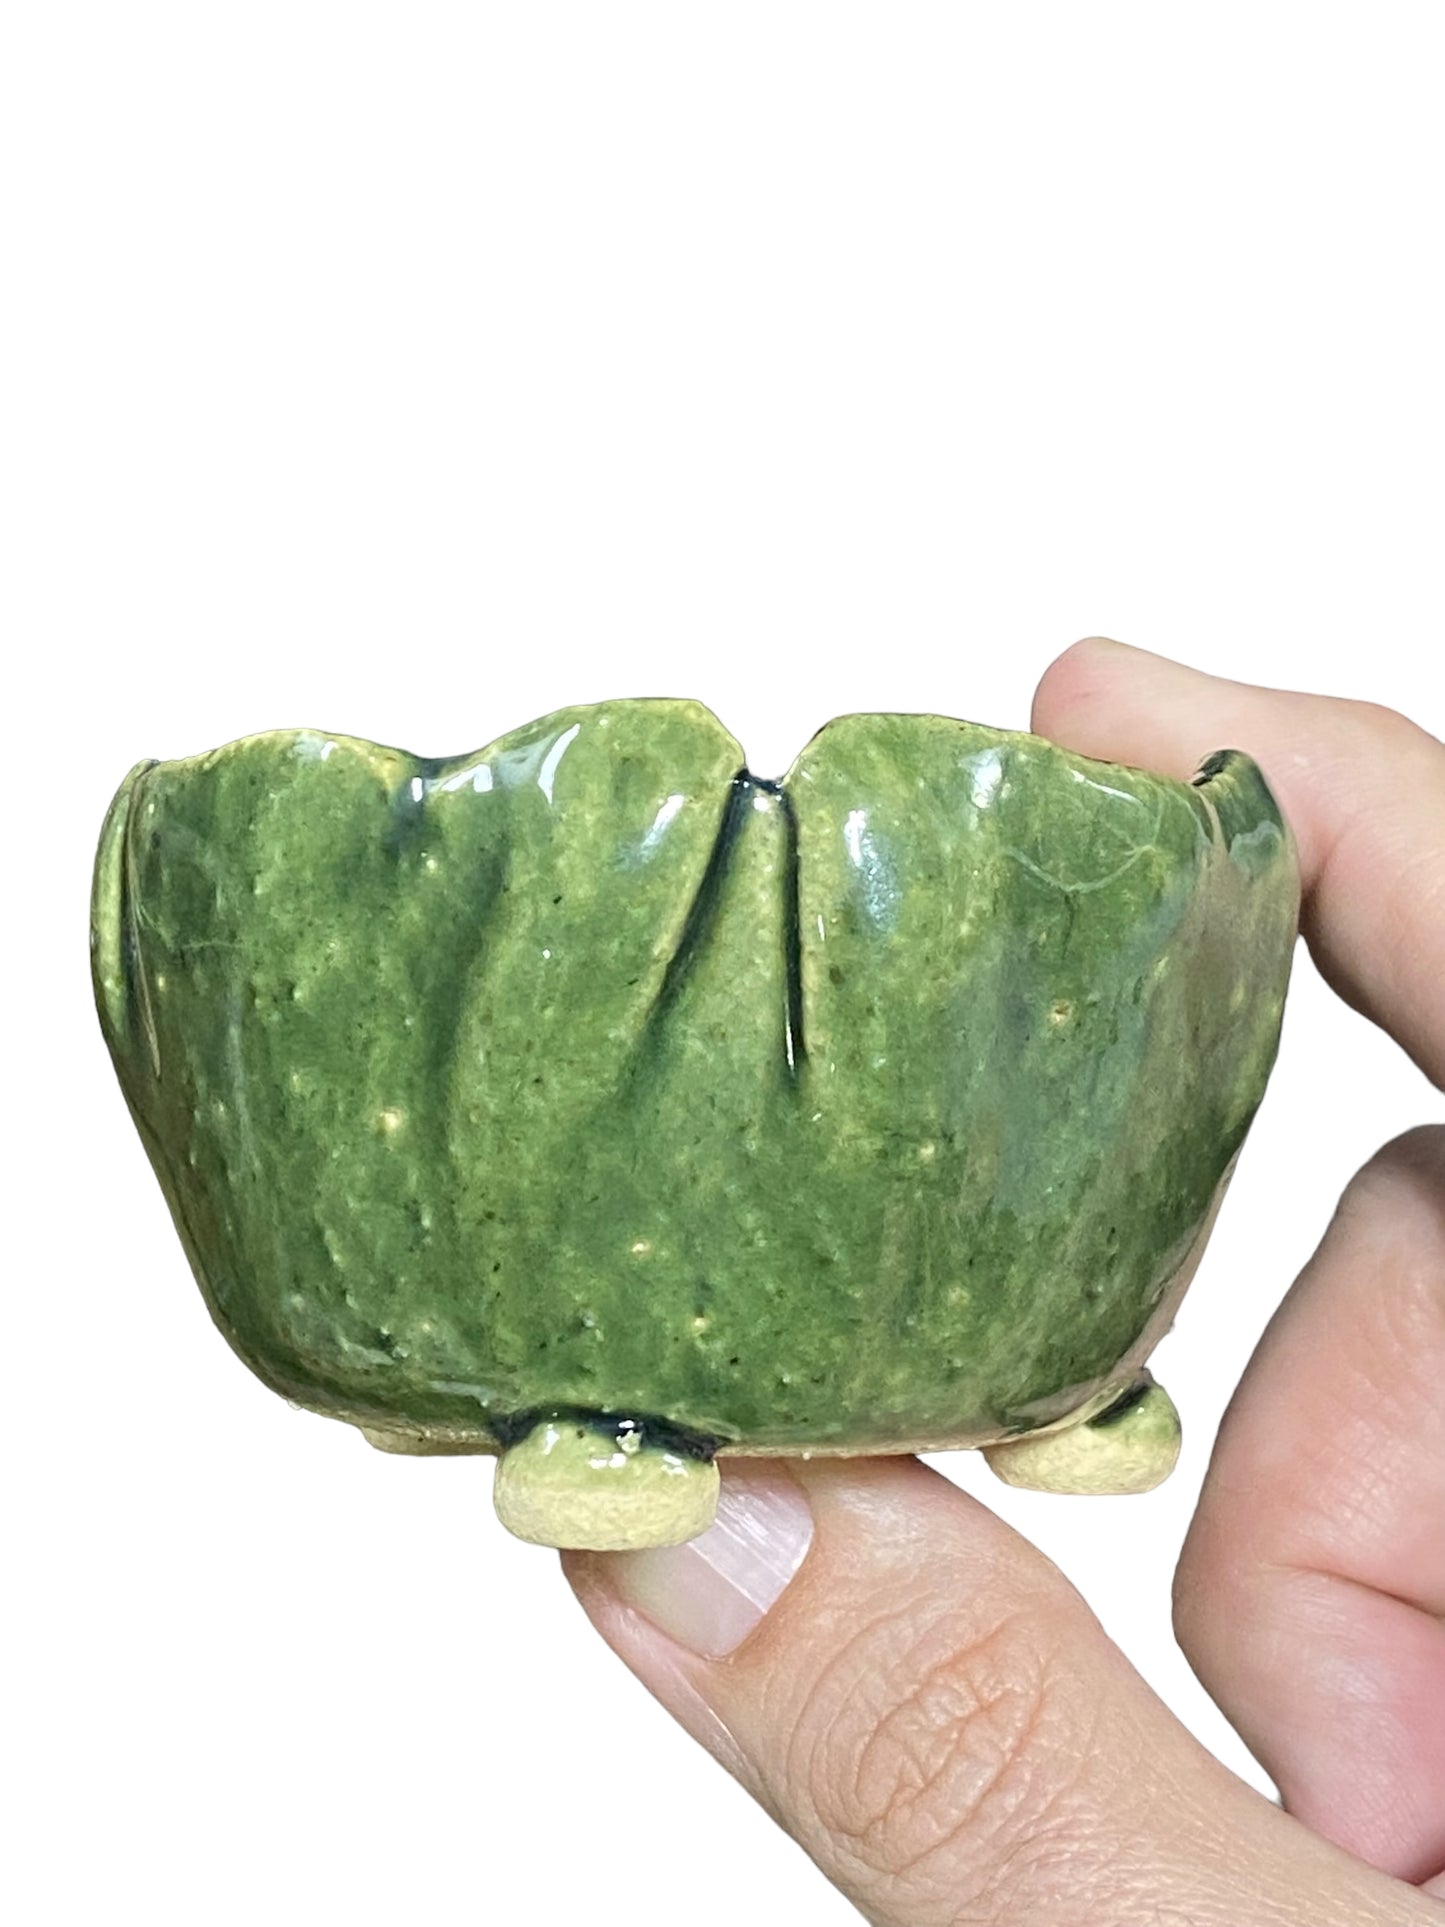 Shoseki - Glazed Footed Bowl Bonsai or Accent Pot